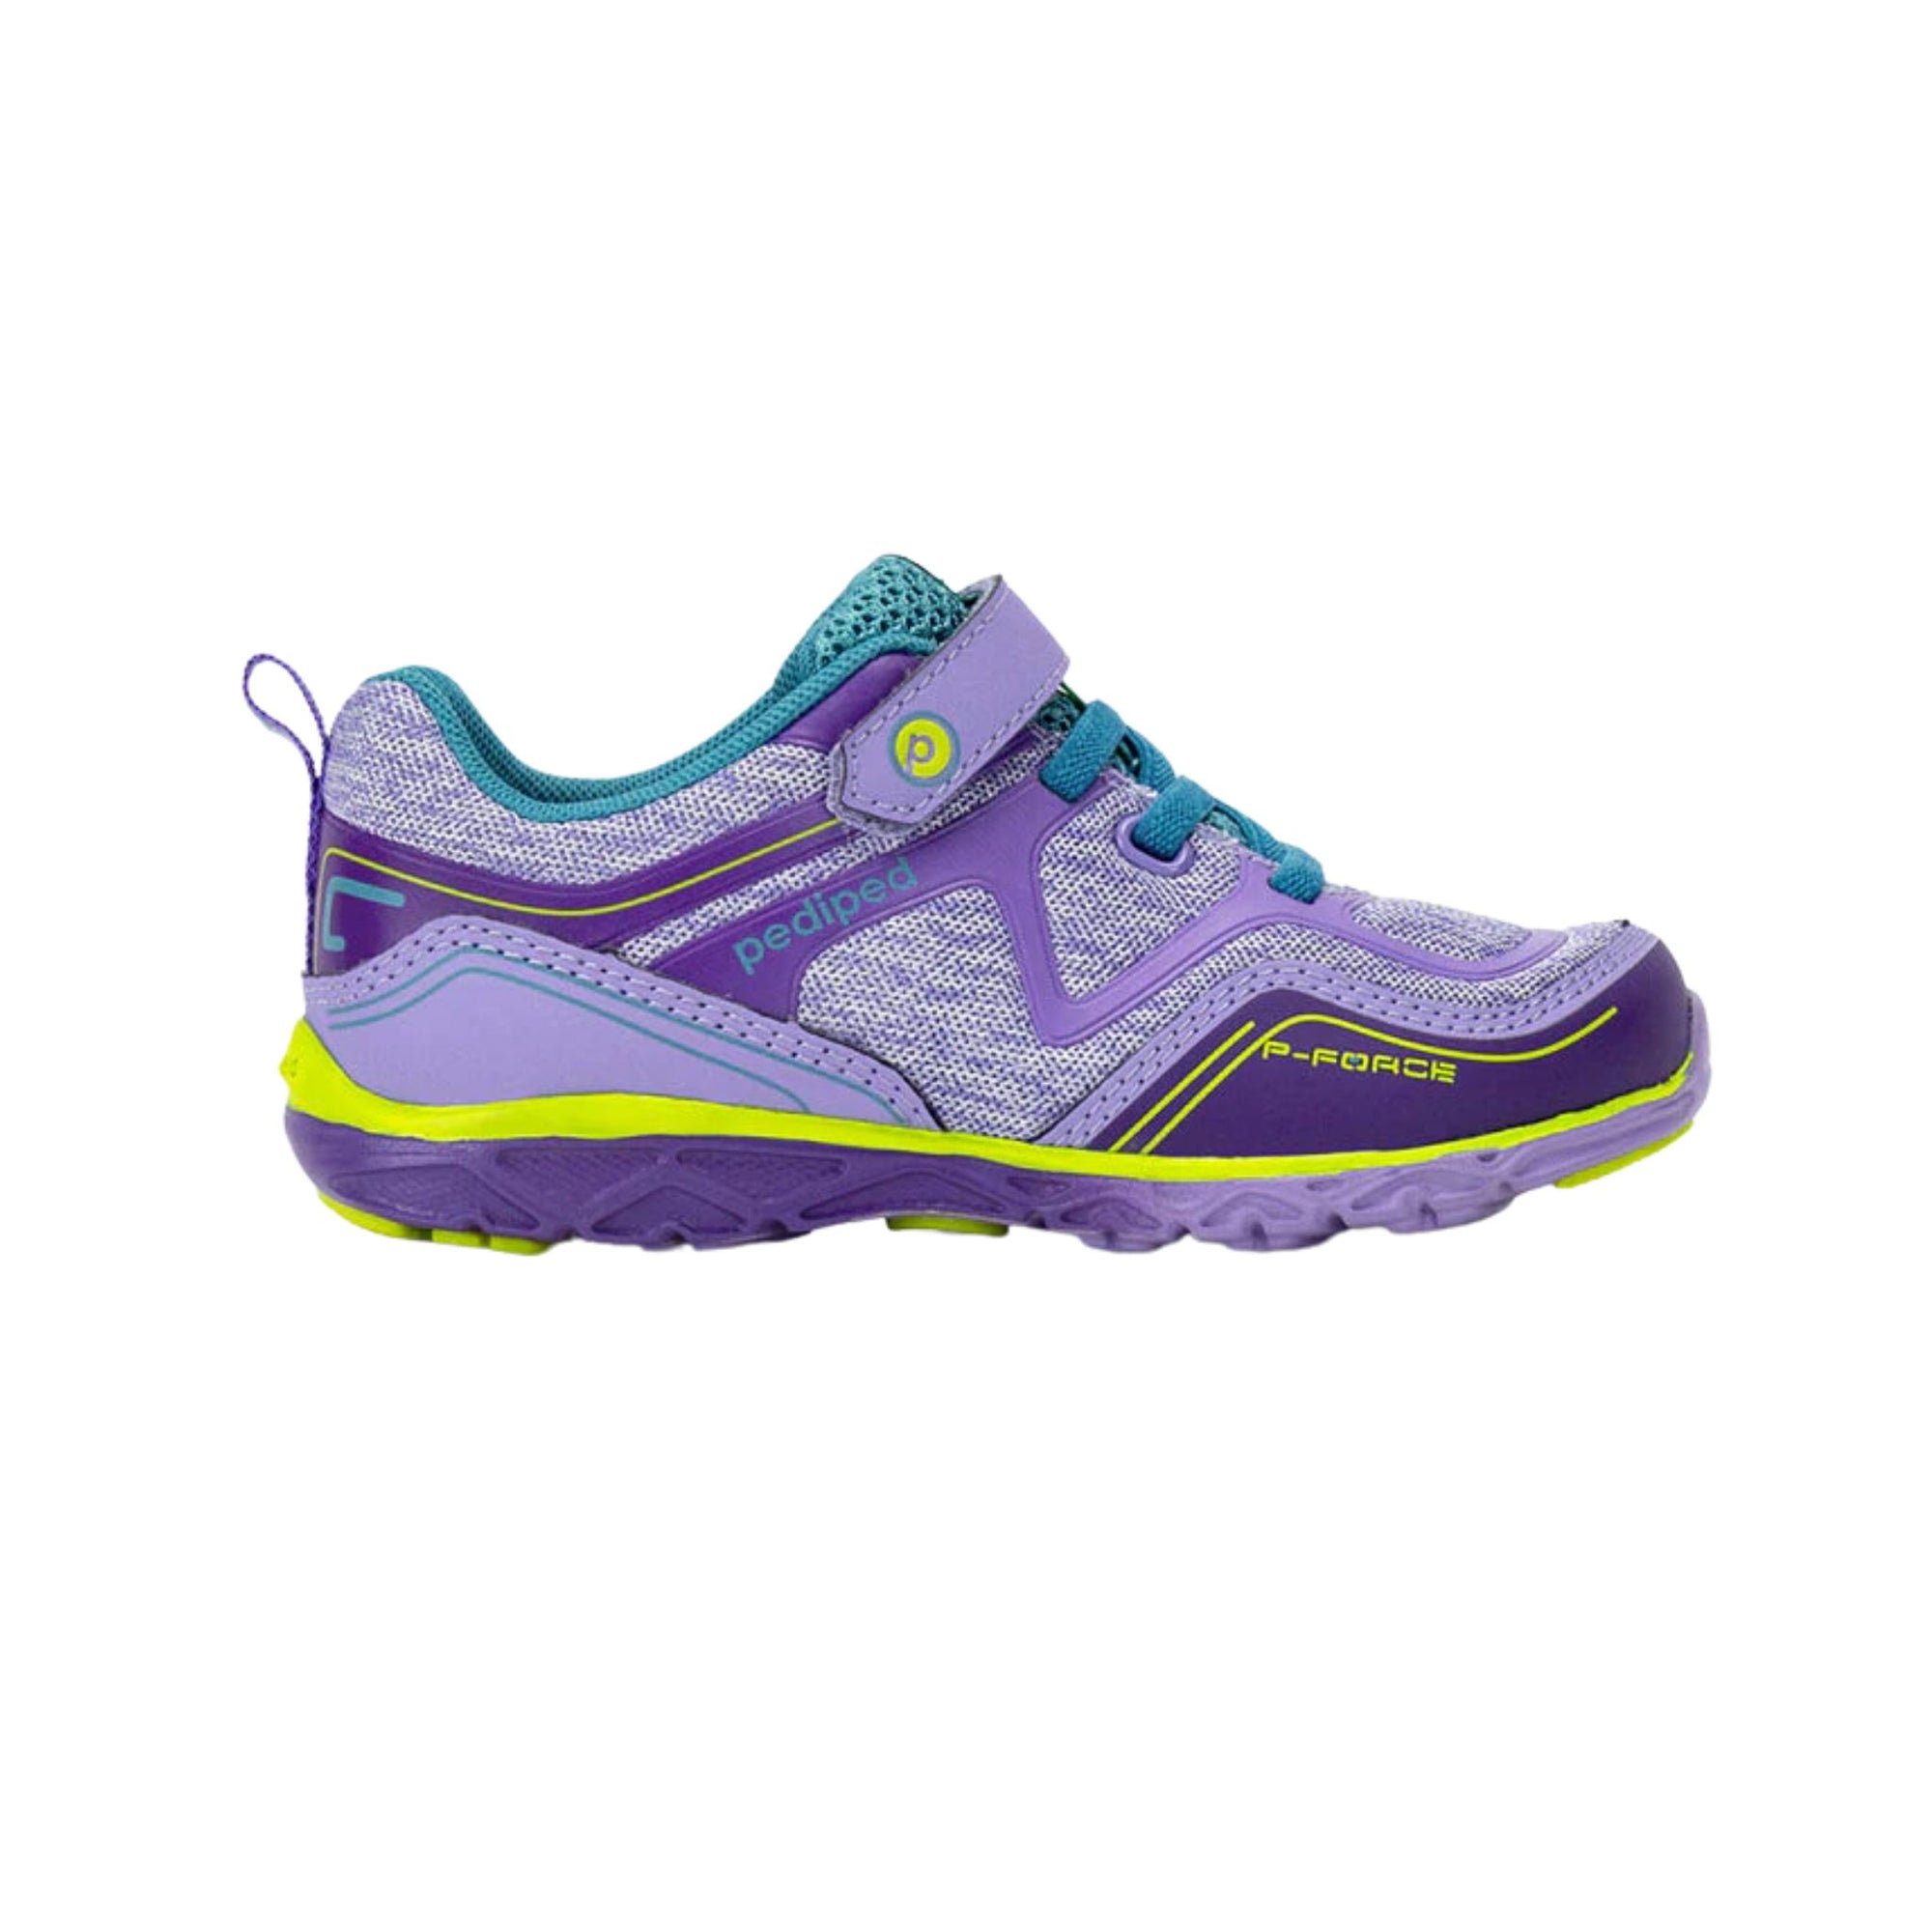 Pediped Flex Force Lavender Athletic Shoes